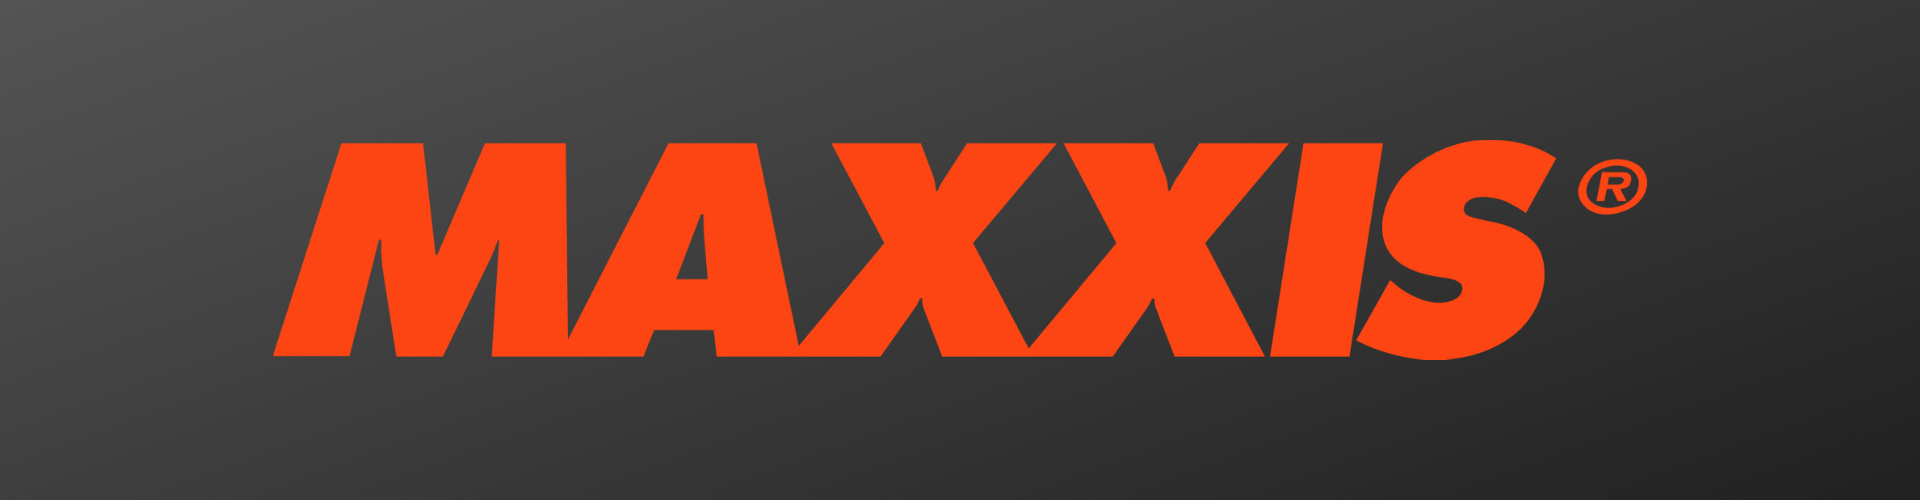 maxxis banner logo